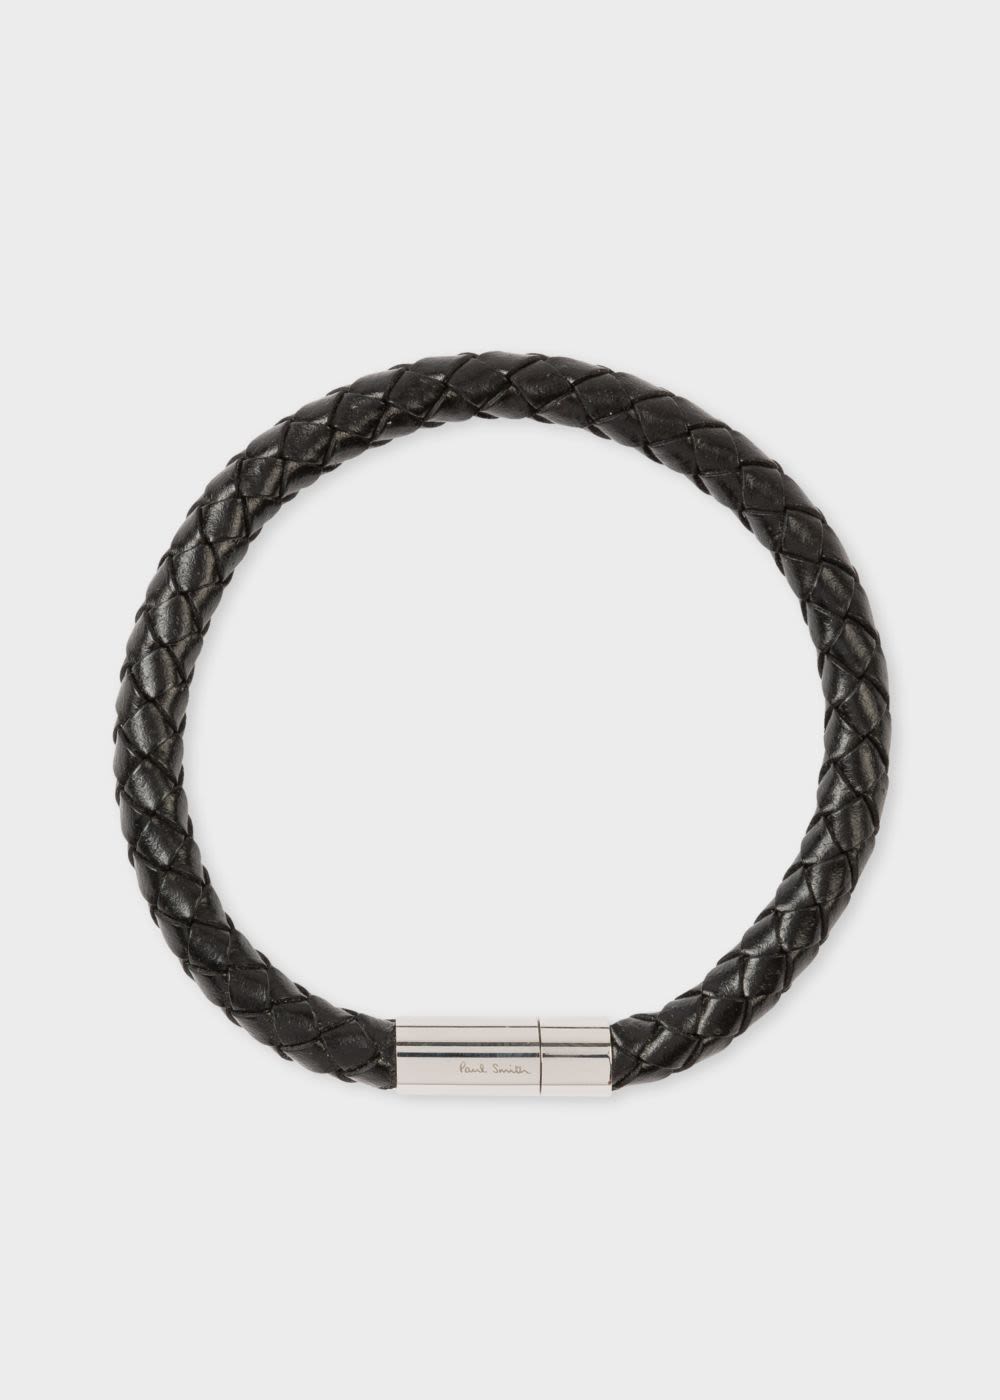 Black Leather Cord Bracelet for Men - Adjustable Cuff Bracelet for Men -  Nadin Art Design - Personalized Jewelry